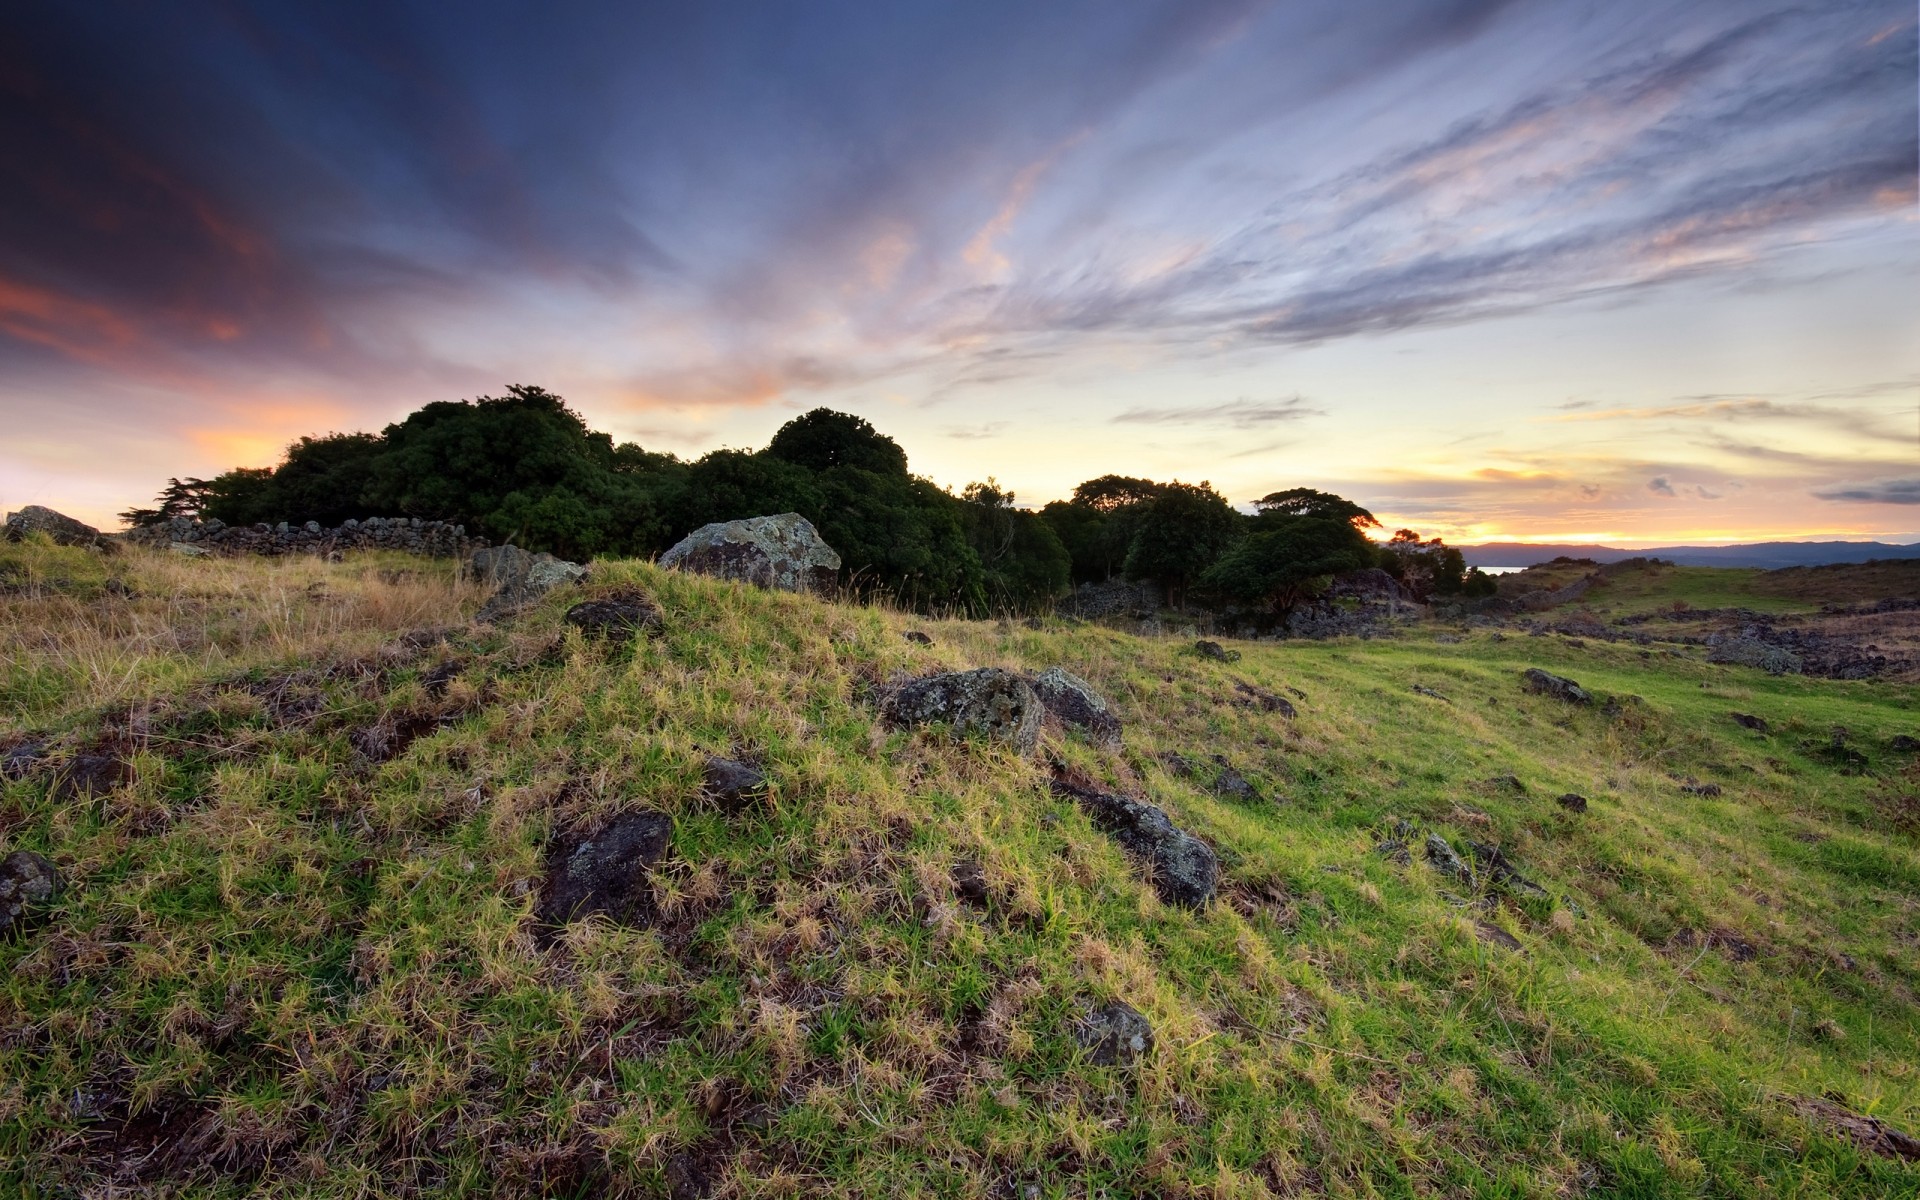 landscapes landscape sky sunset nature grass travel outdoors scenic hill grassland hayfield dawn evening rocks